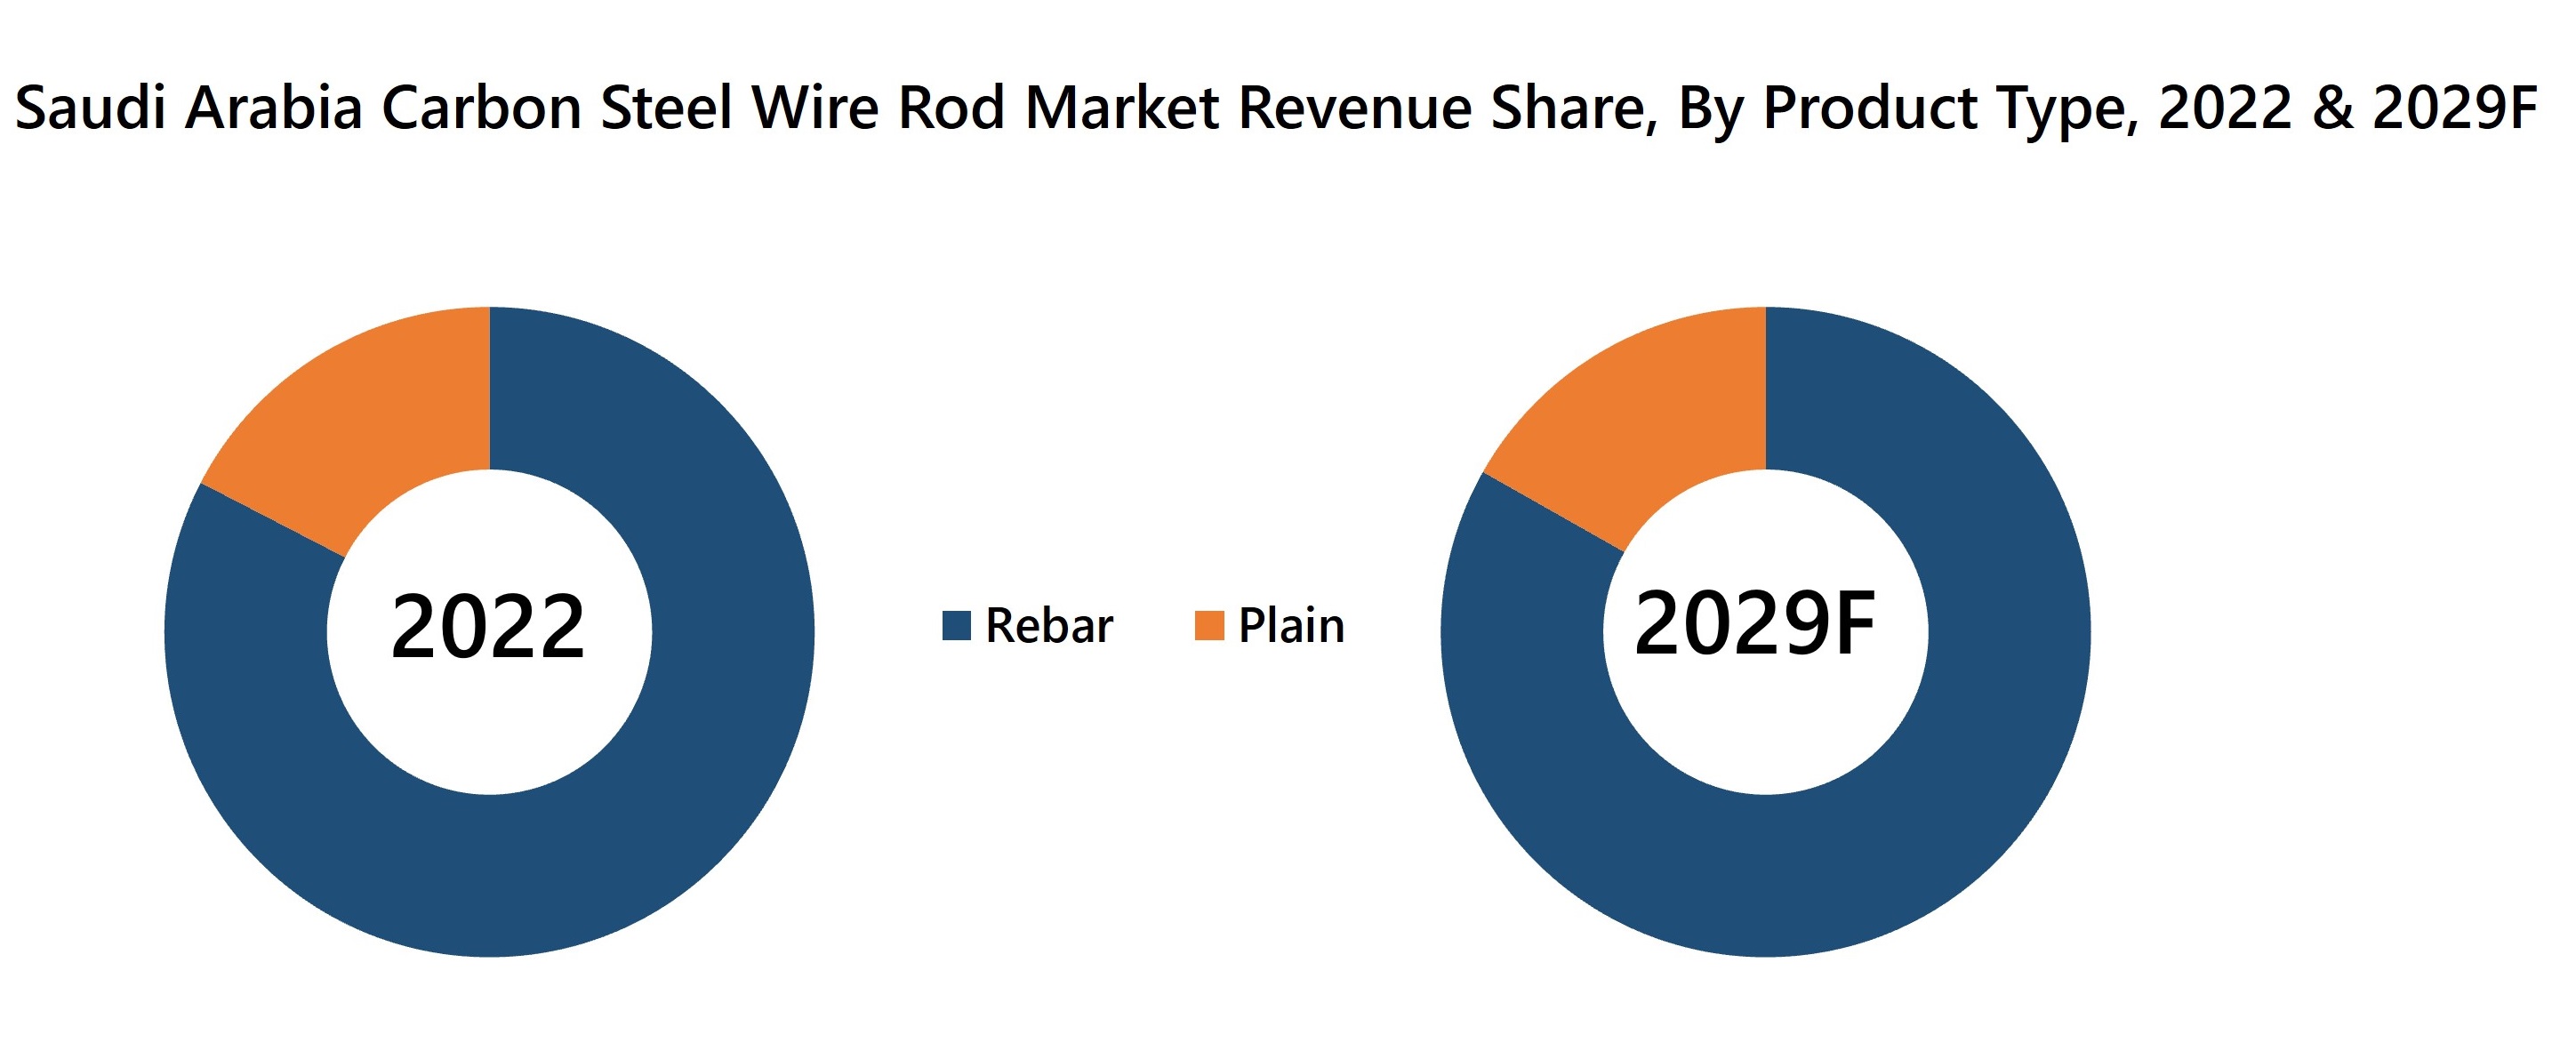 Saudi Arabia Carbon Steel Wire Rod Market Revenue Share